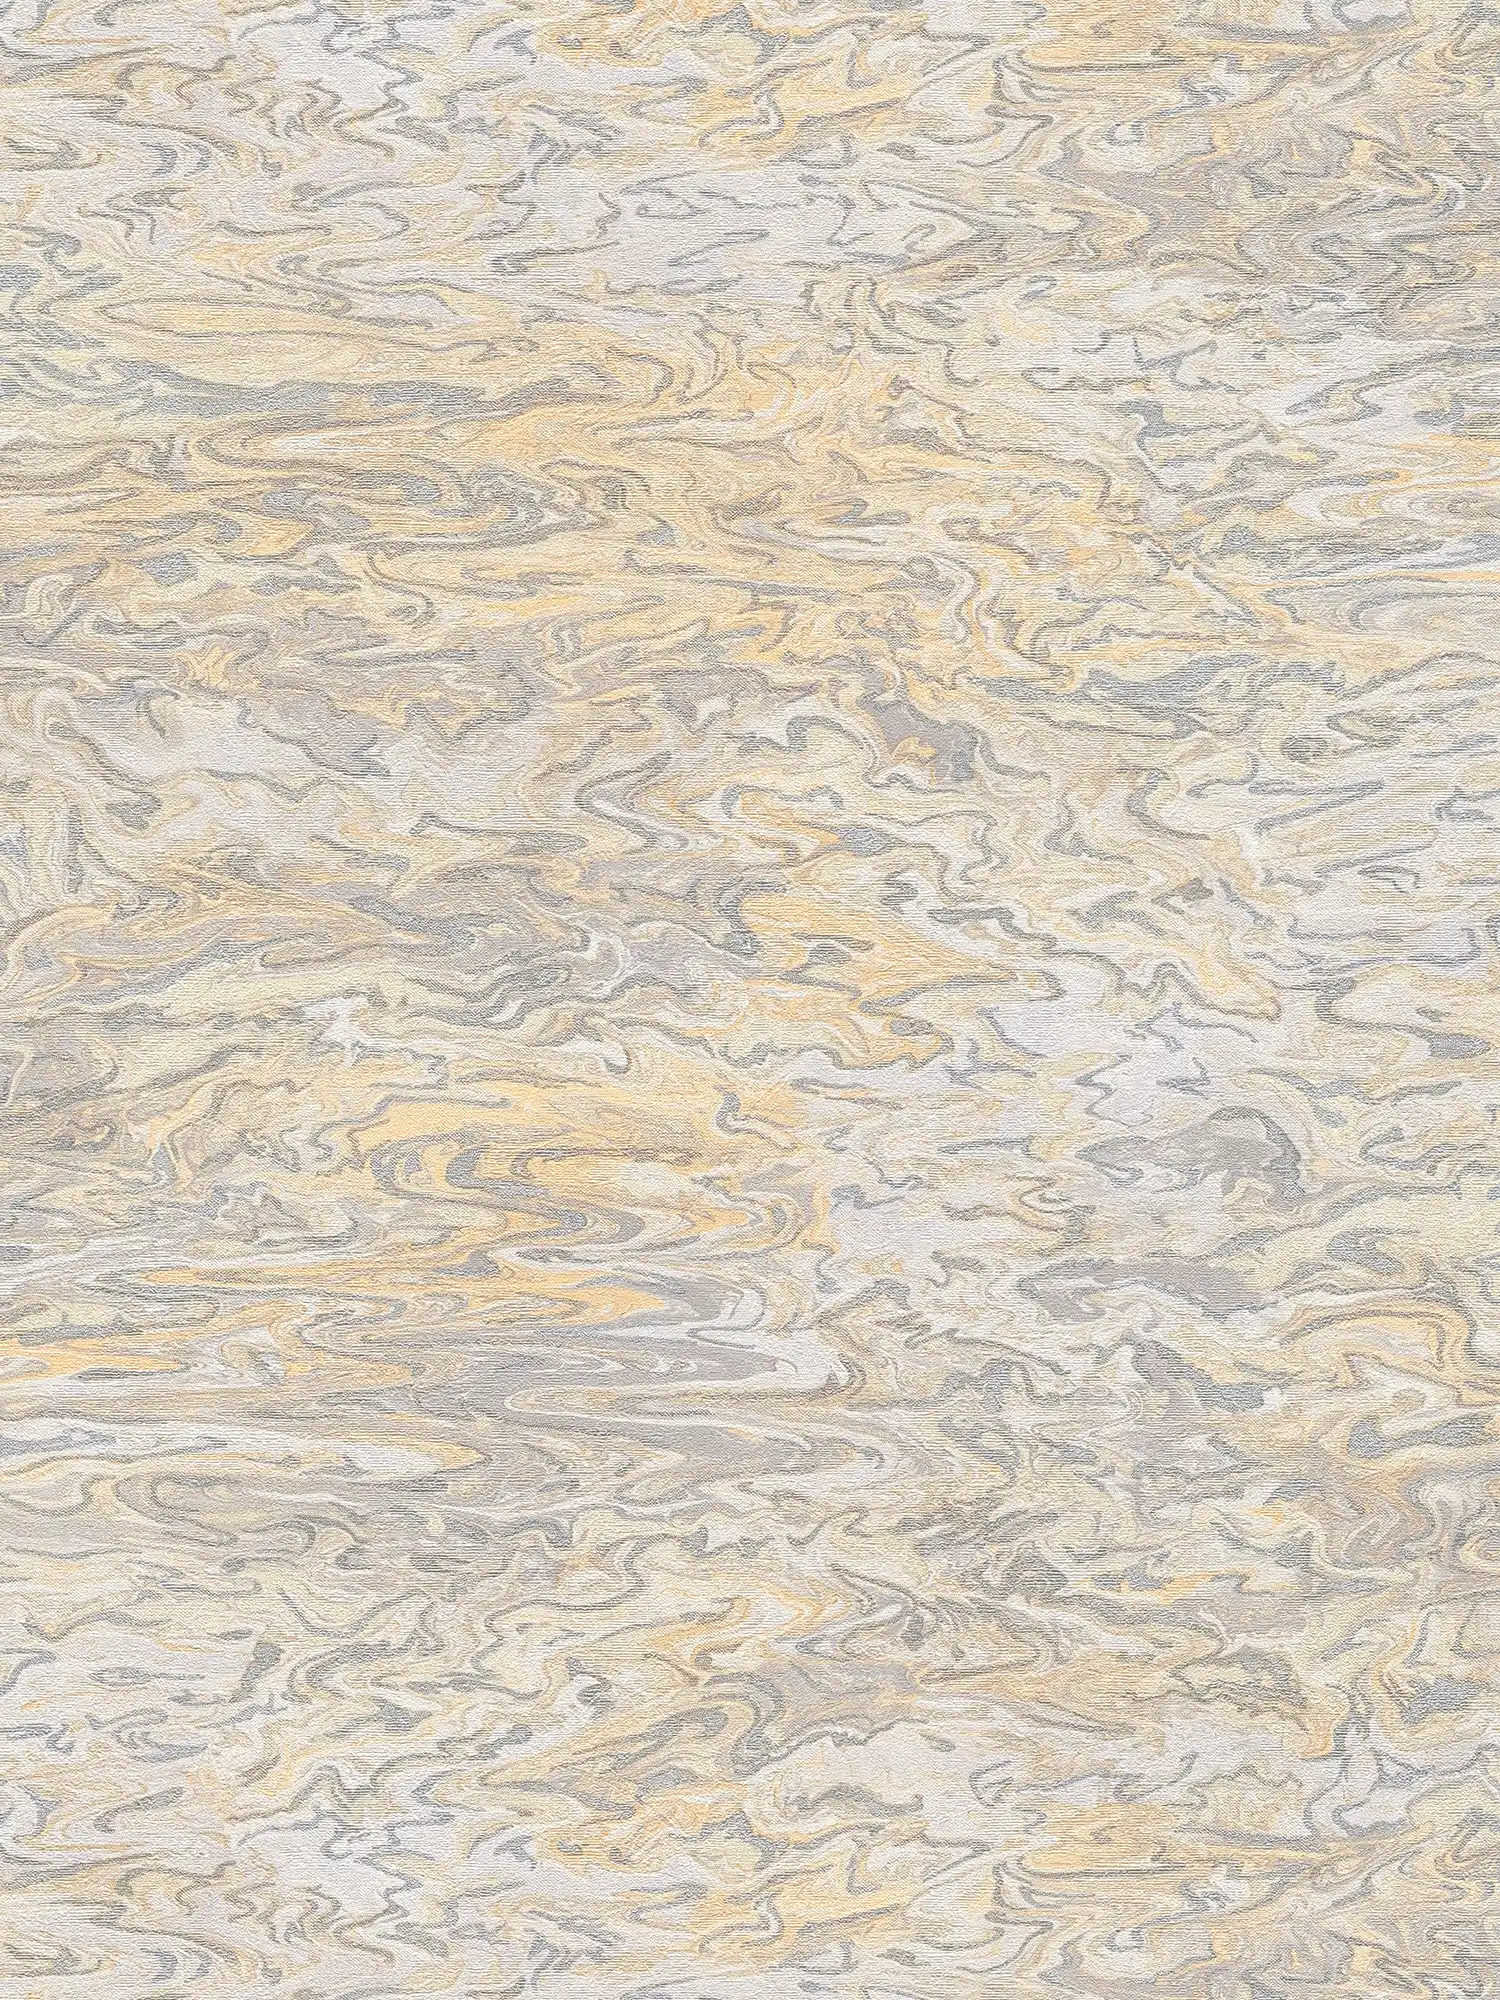 Marbled wallpaper abstract design - beige, grey, cream
